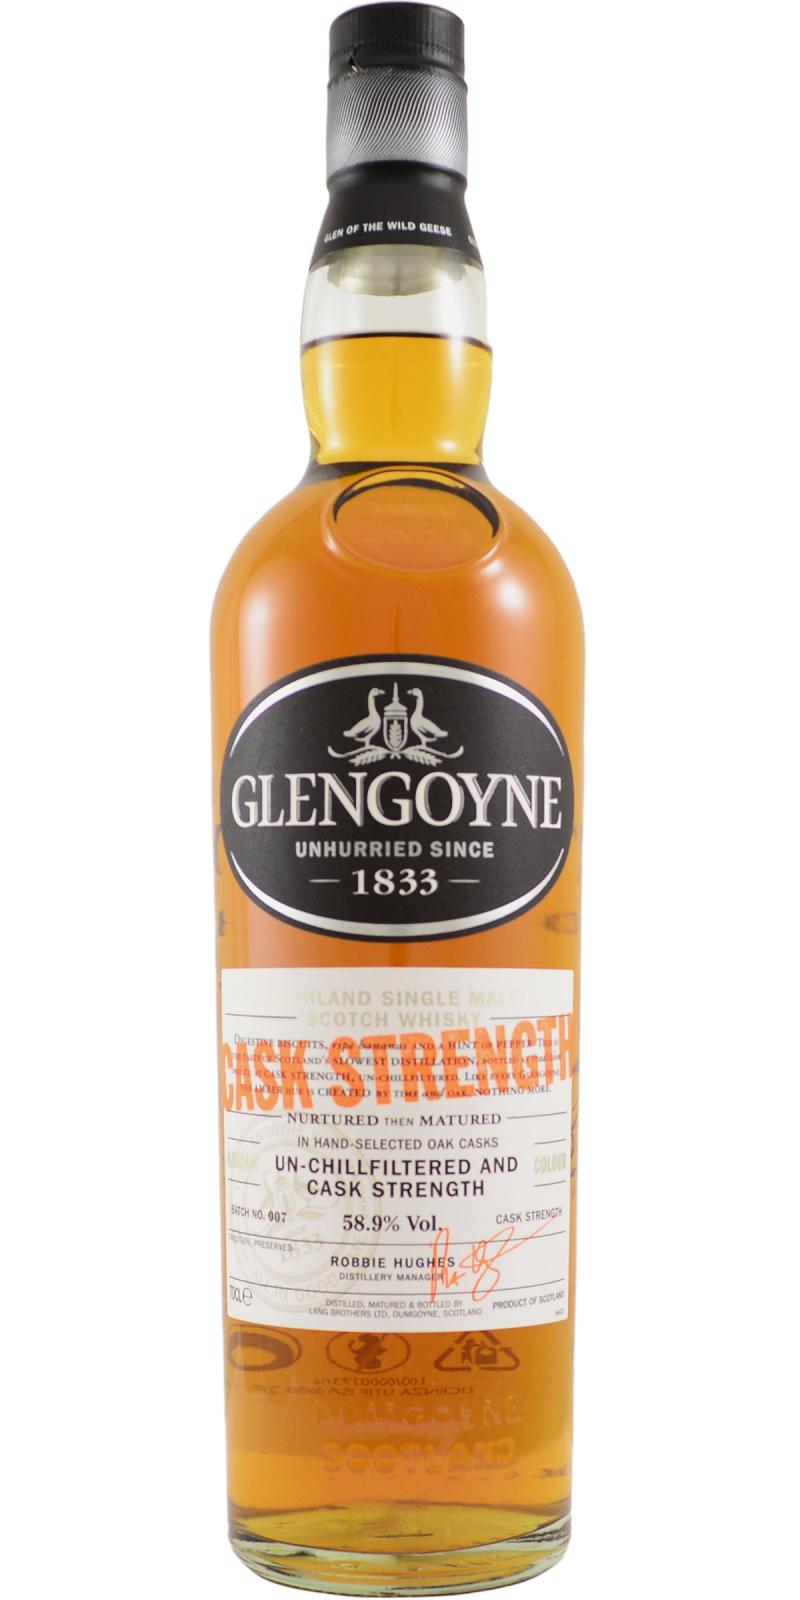 Glengoyne Cask Strength